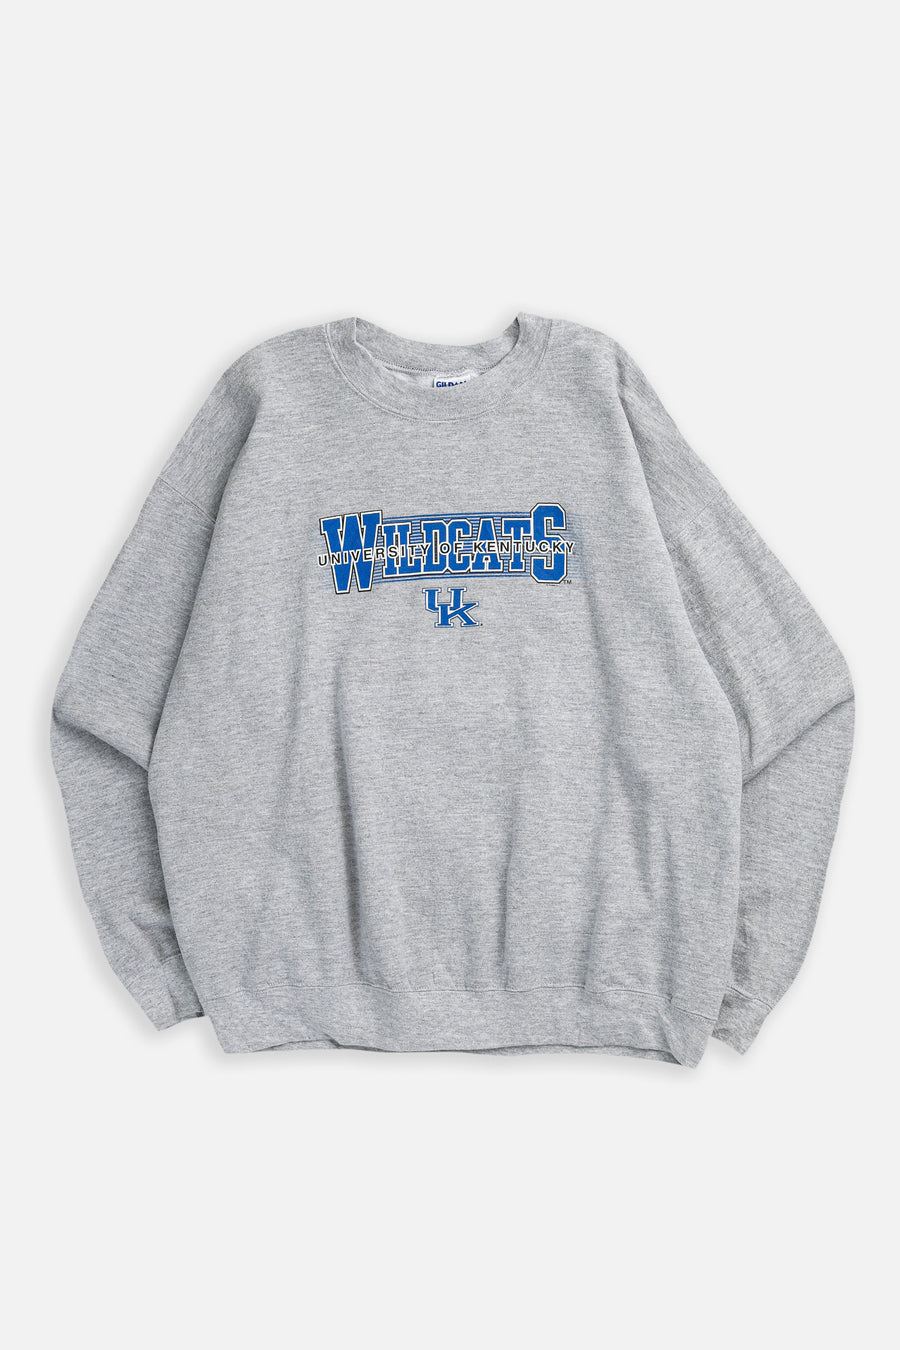 Vintage Kentucky University Sweatshirt - L